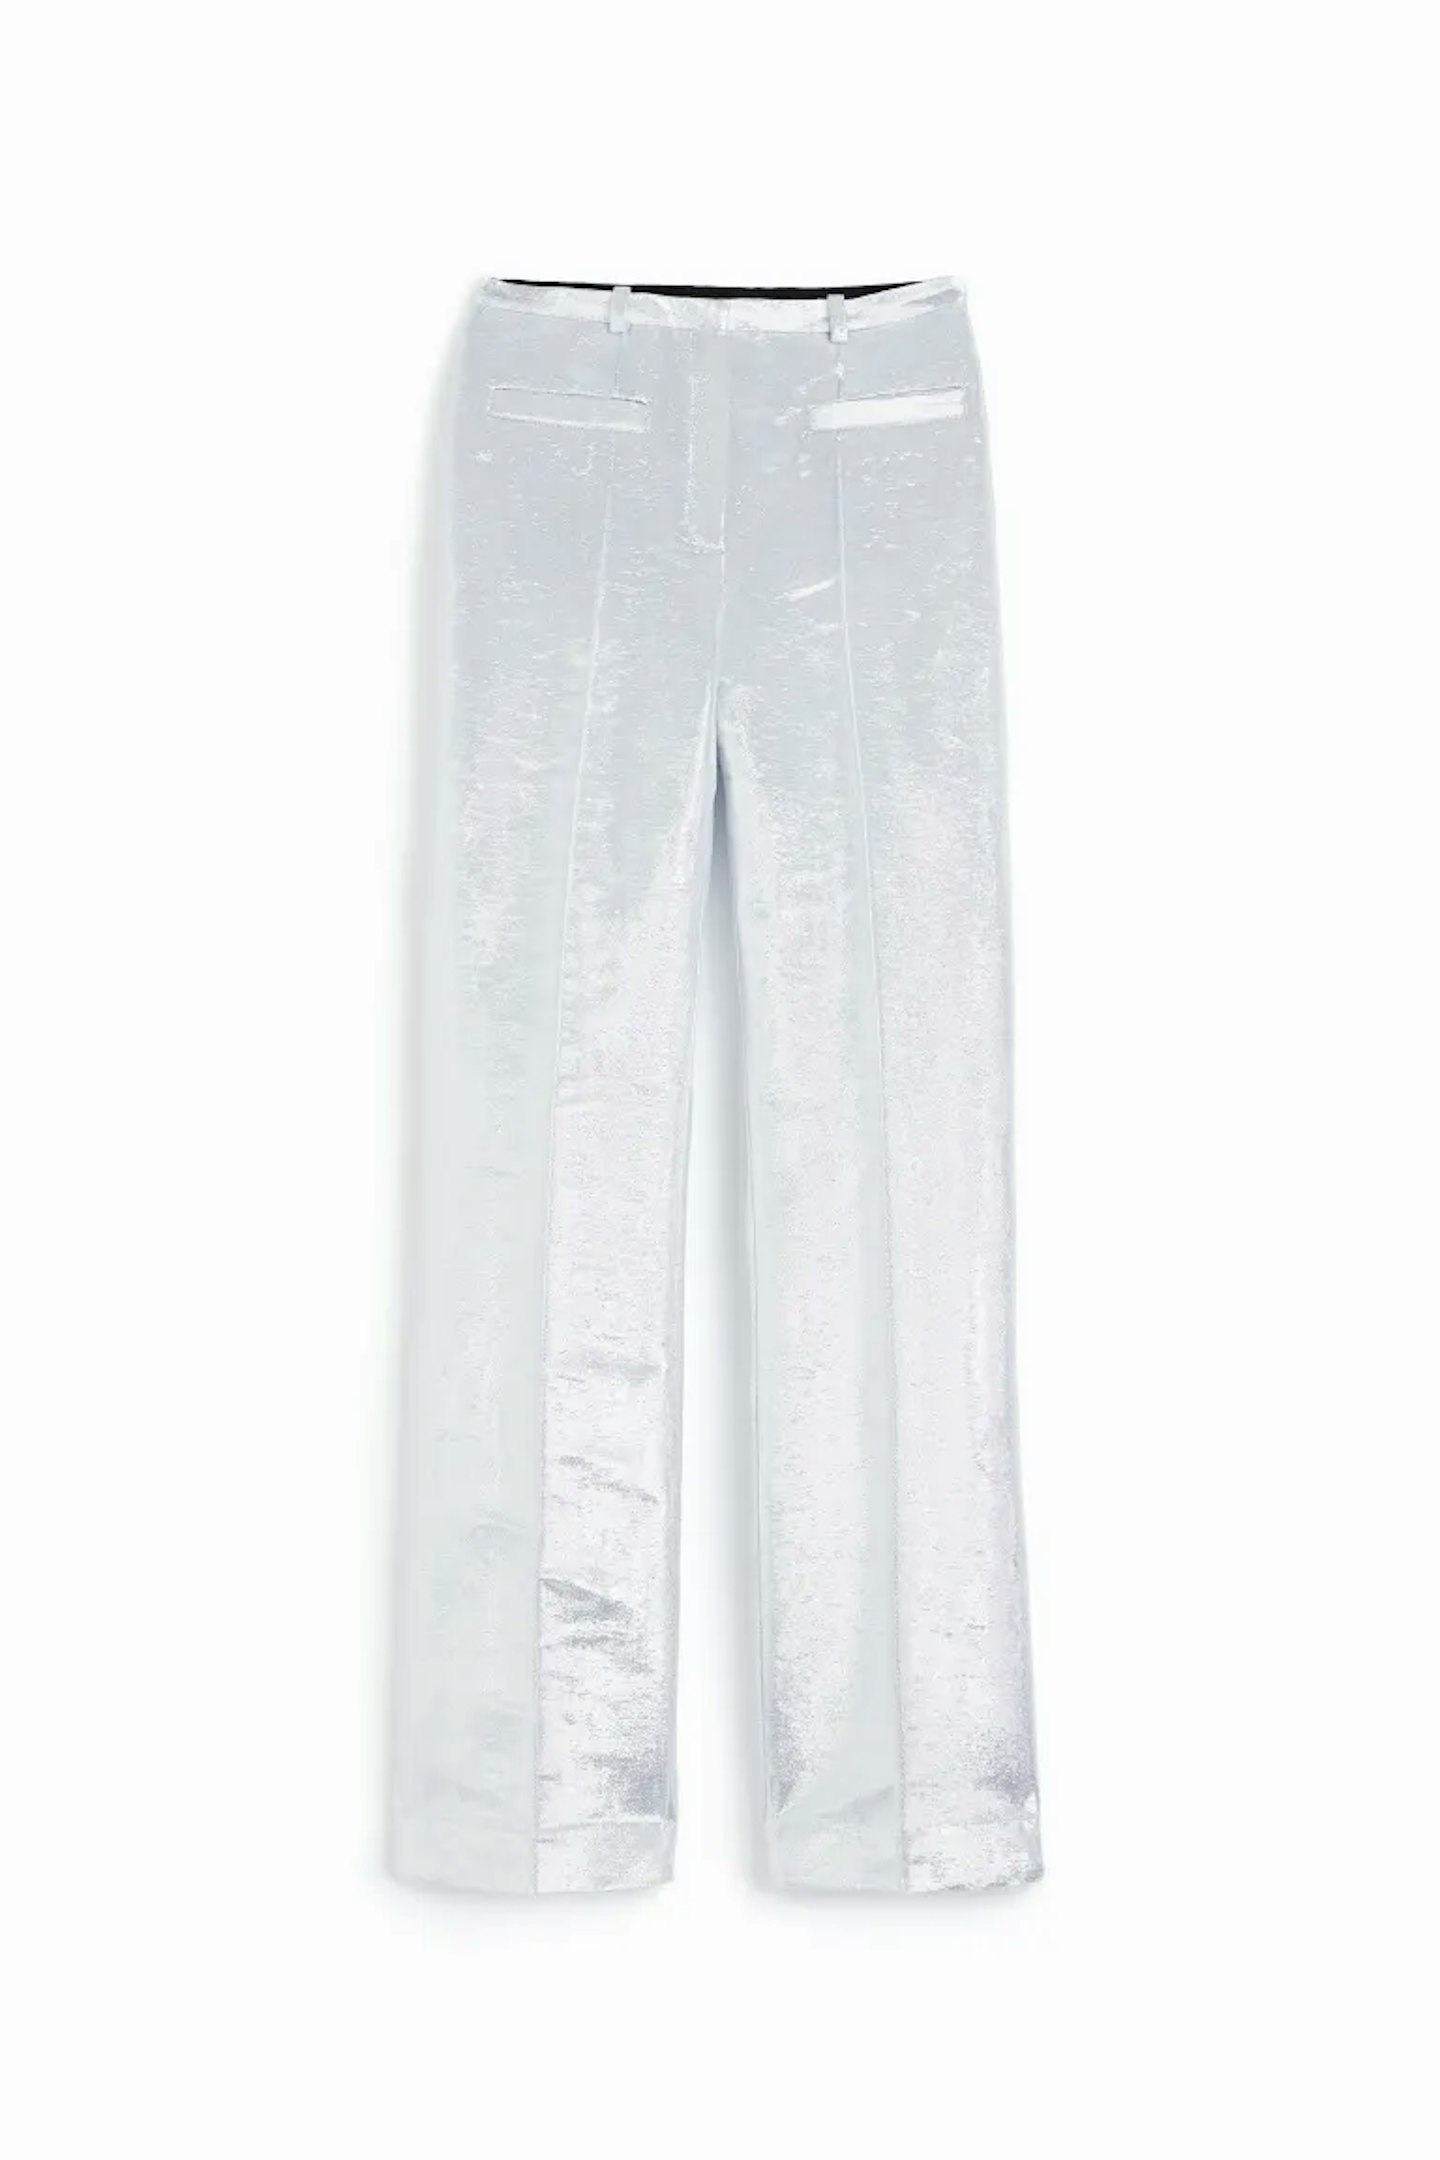 rabanne x h&m silver trousers 